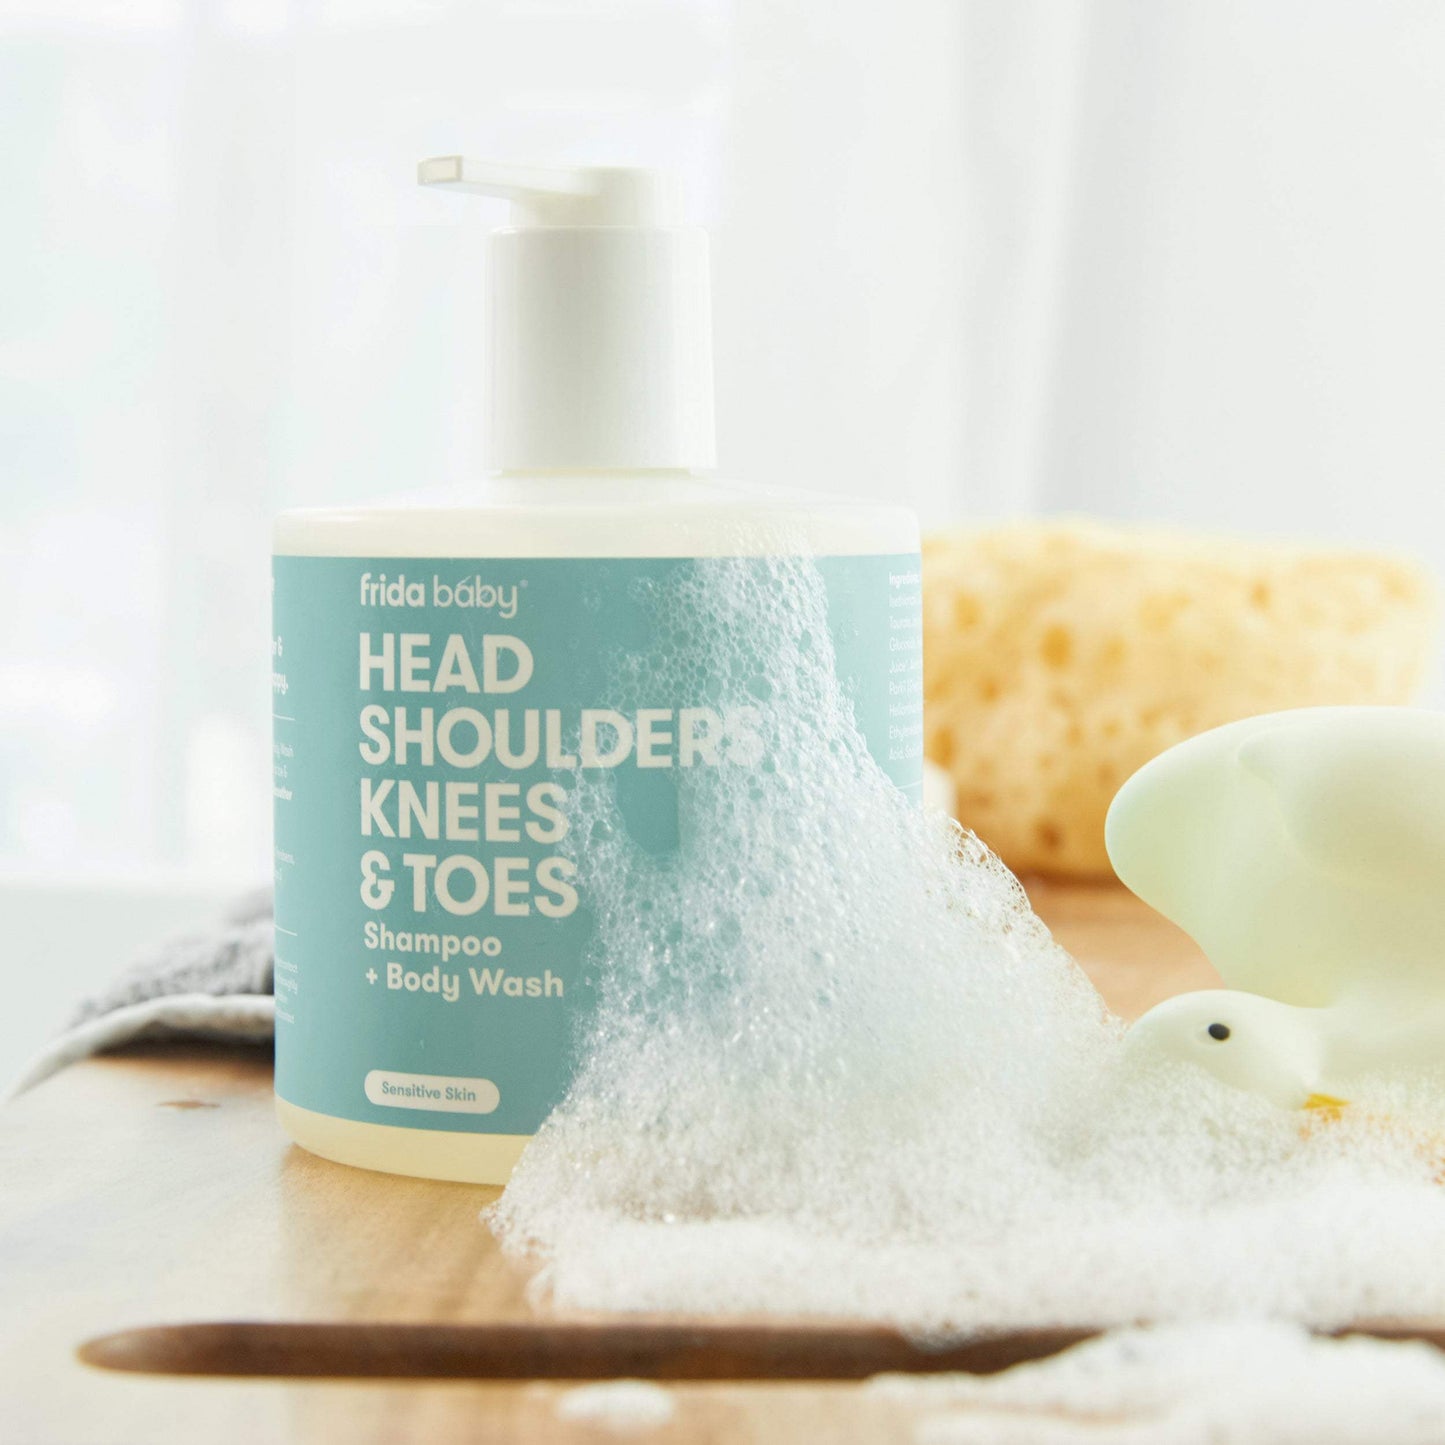 Head Shoulders Knees & Toes Shampoo + Body Wash